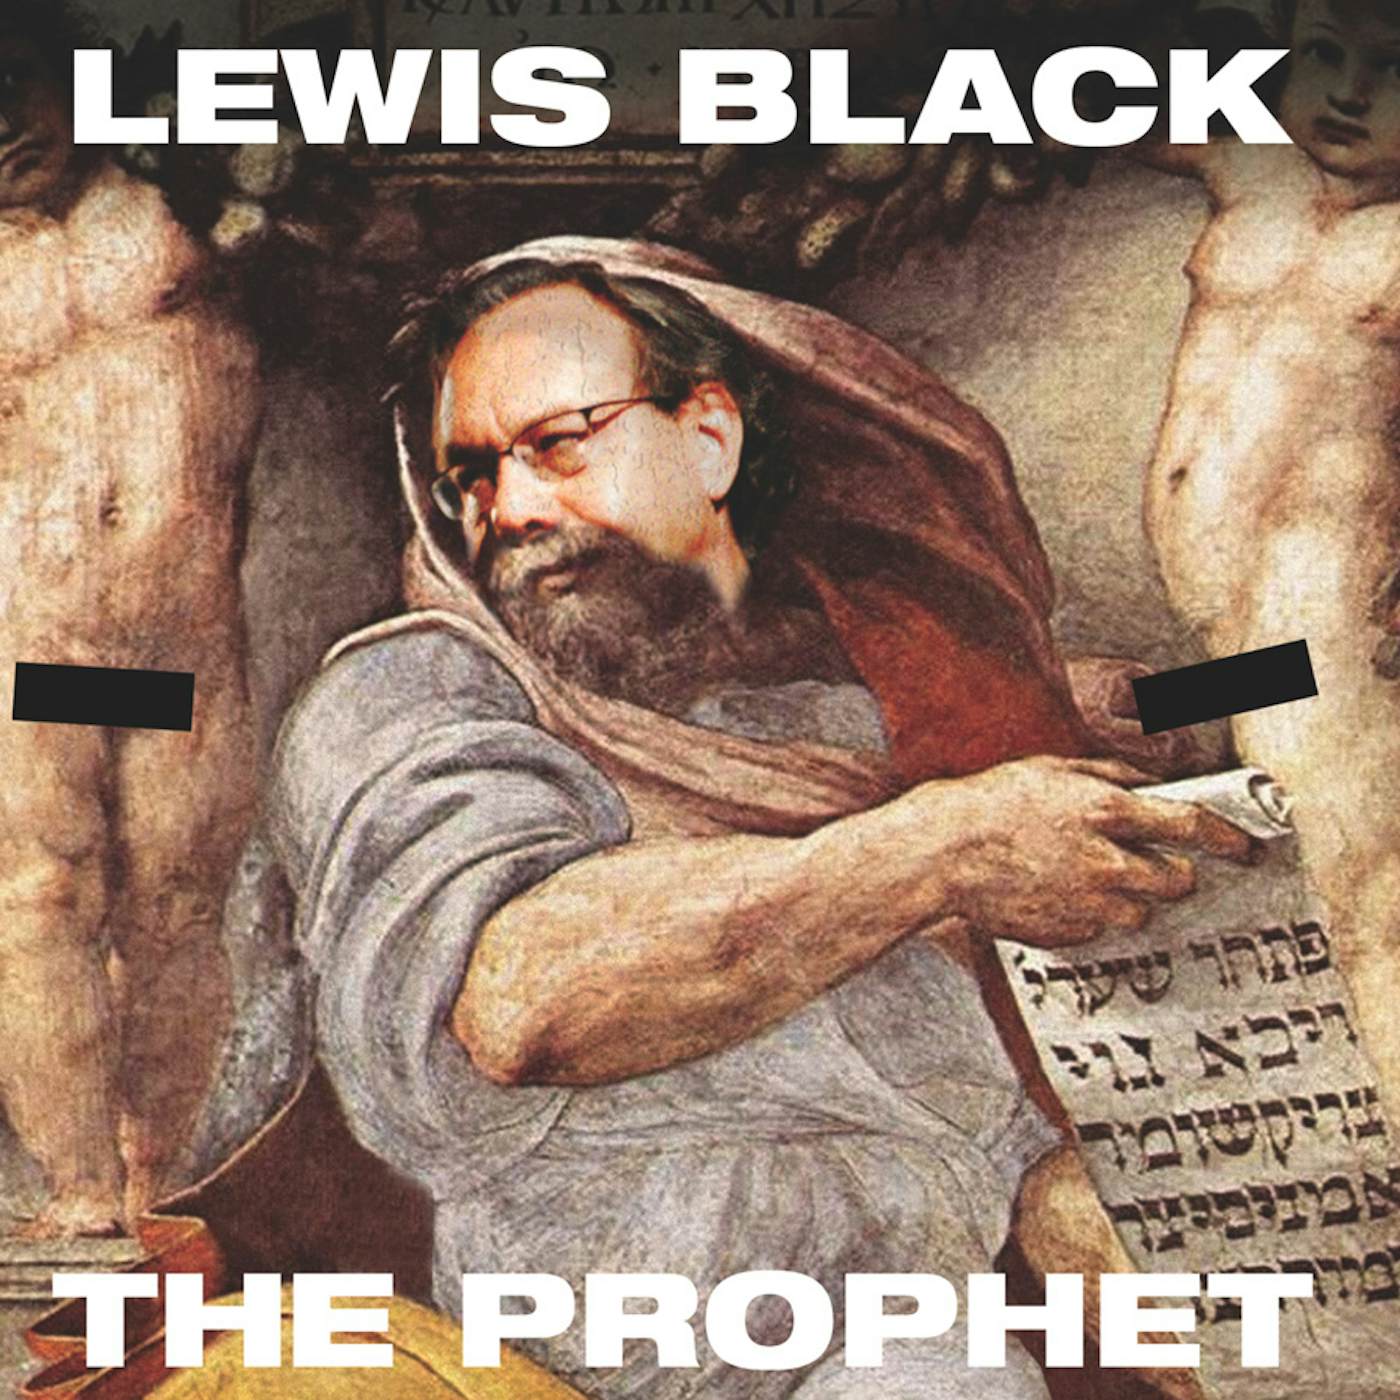 Lewis Black PROPHET CD